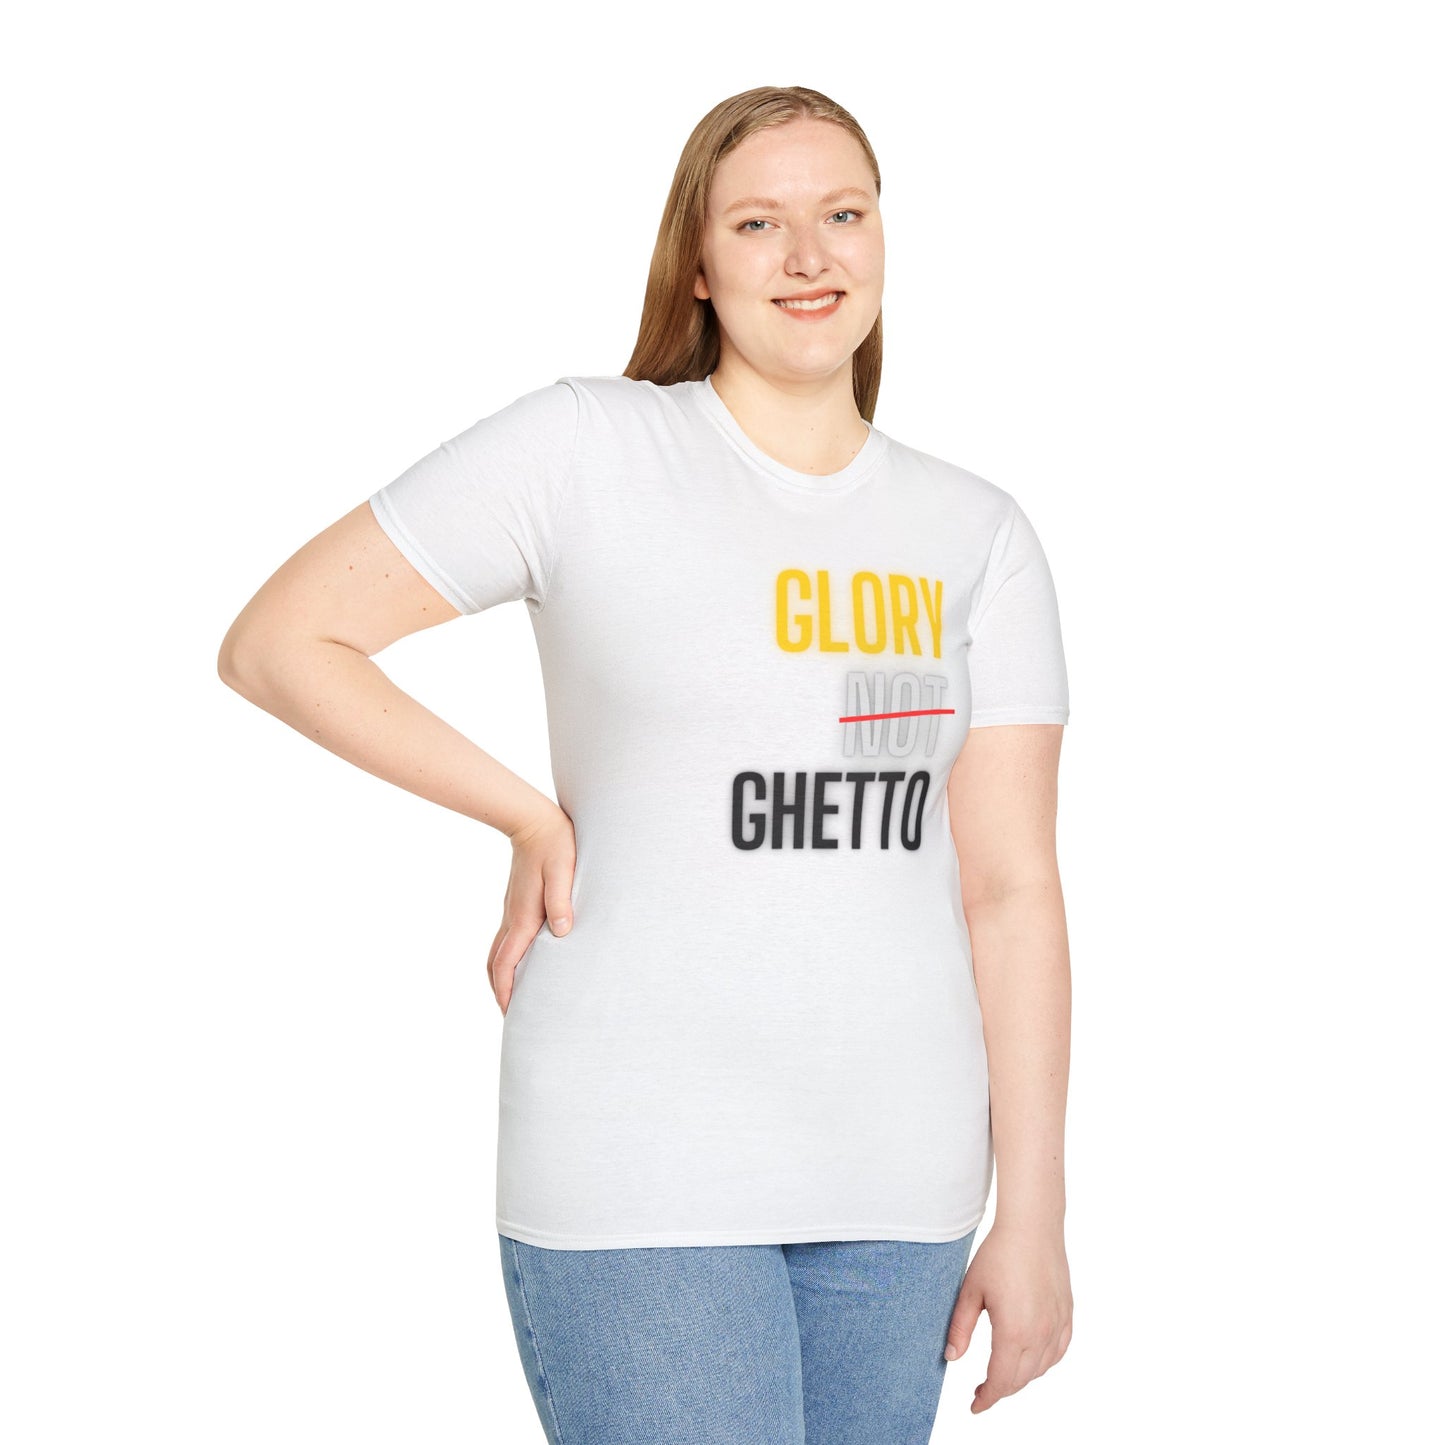 Glory Not Ghetto Unisex Softstyle T-Shirt